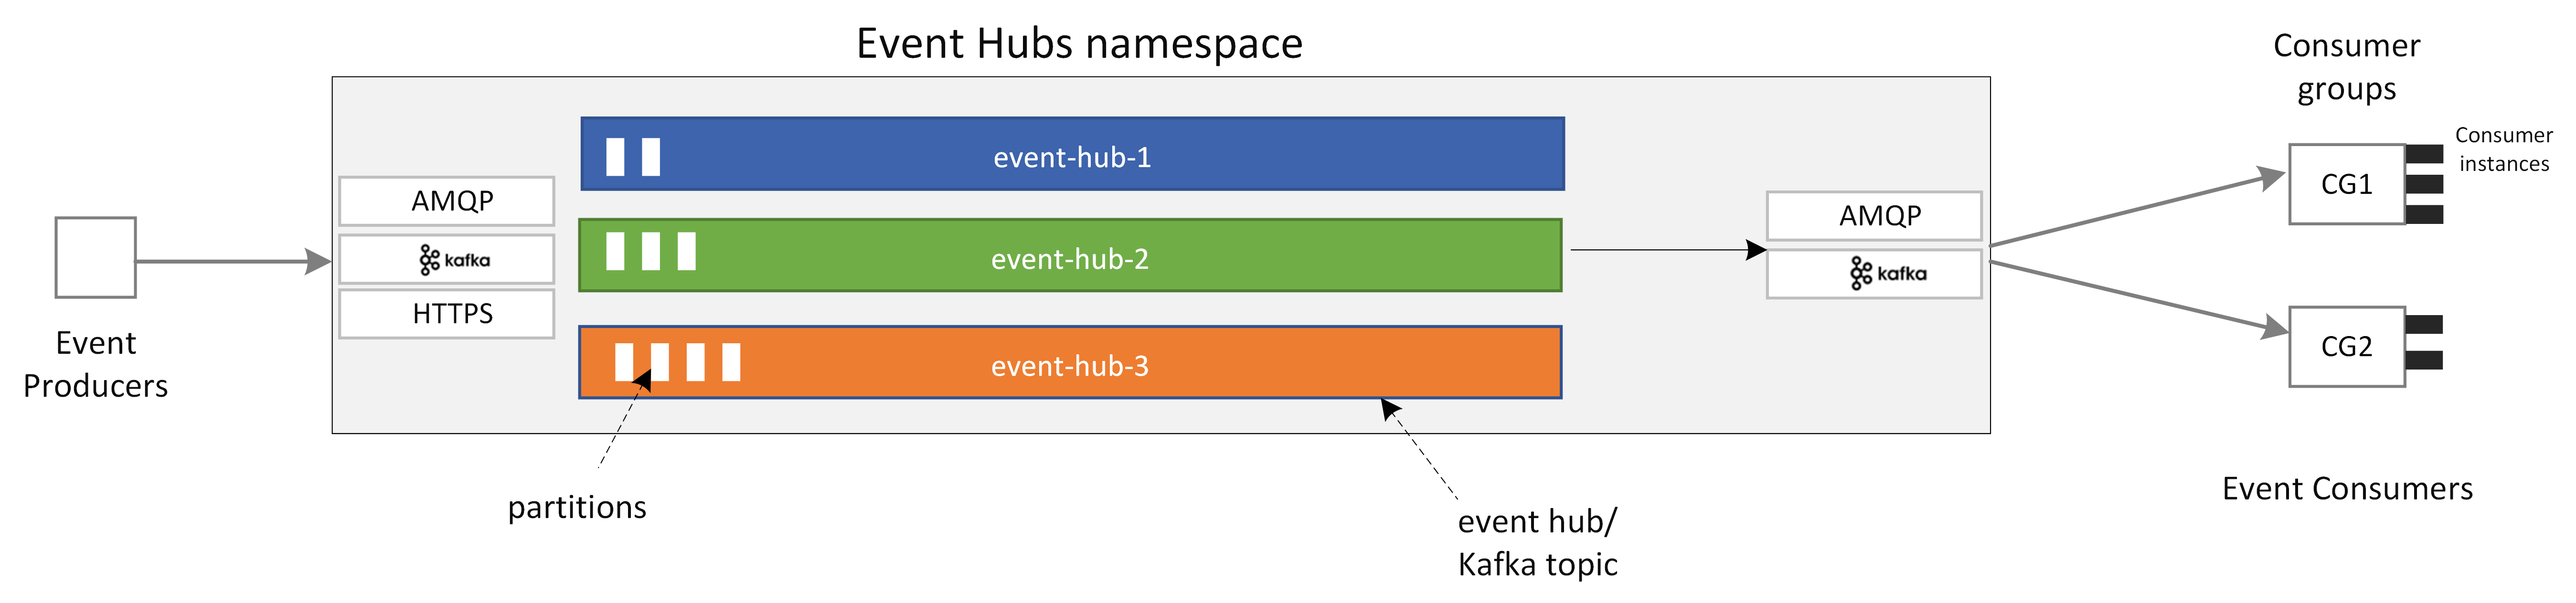 Diagrama que mostra os principais componentes dos Hubs de Eventos.